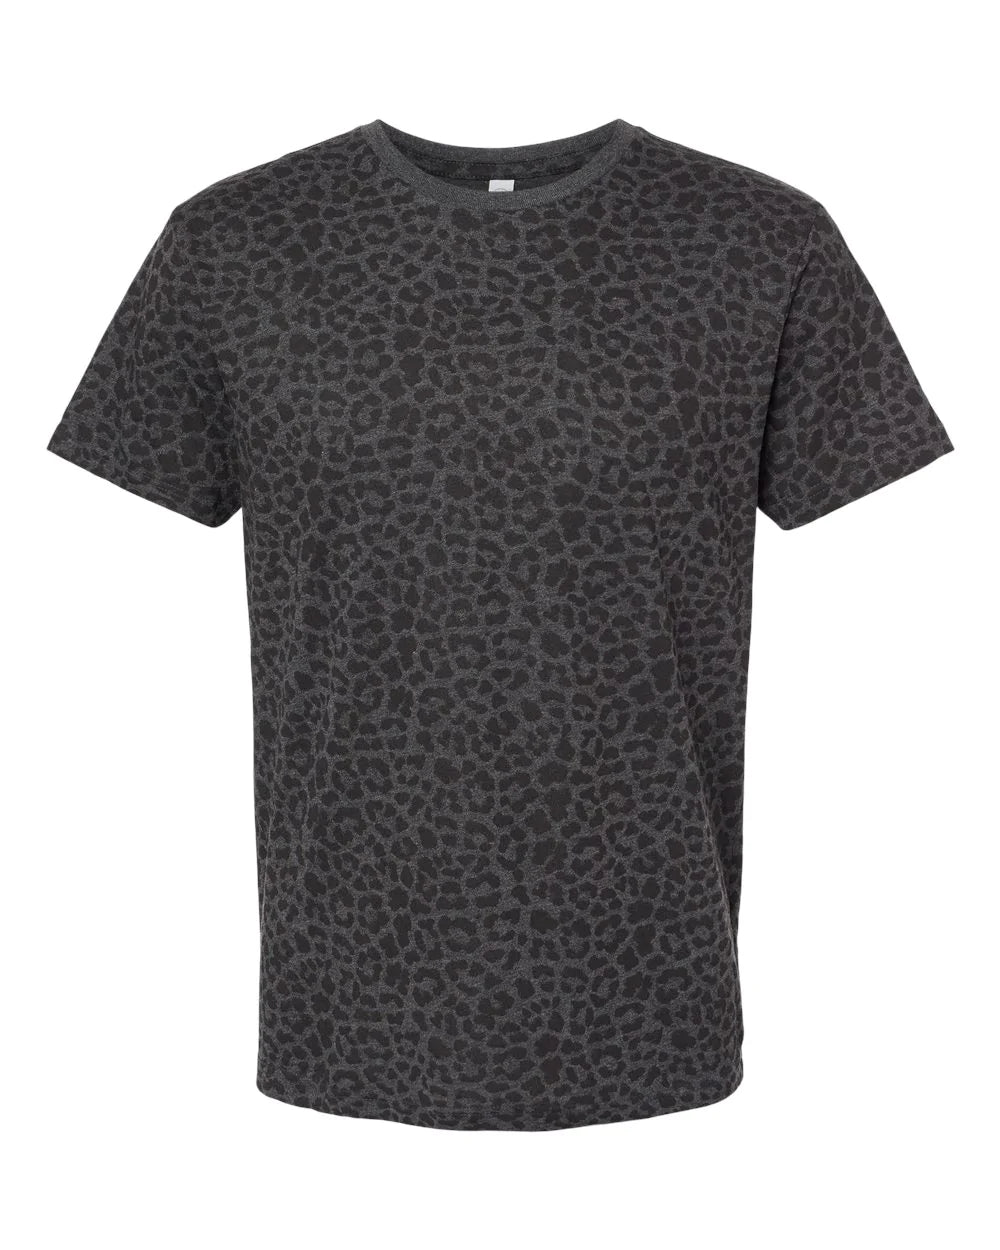 Panthers Puff Design Black Leopard T-shirt